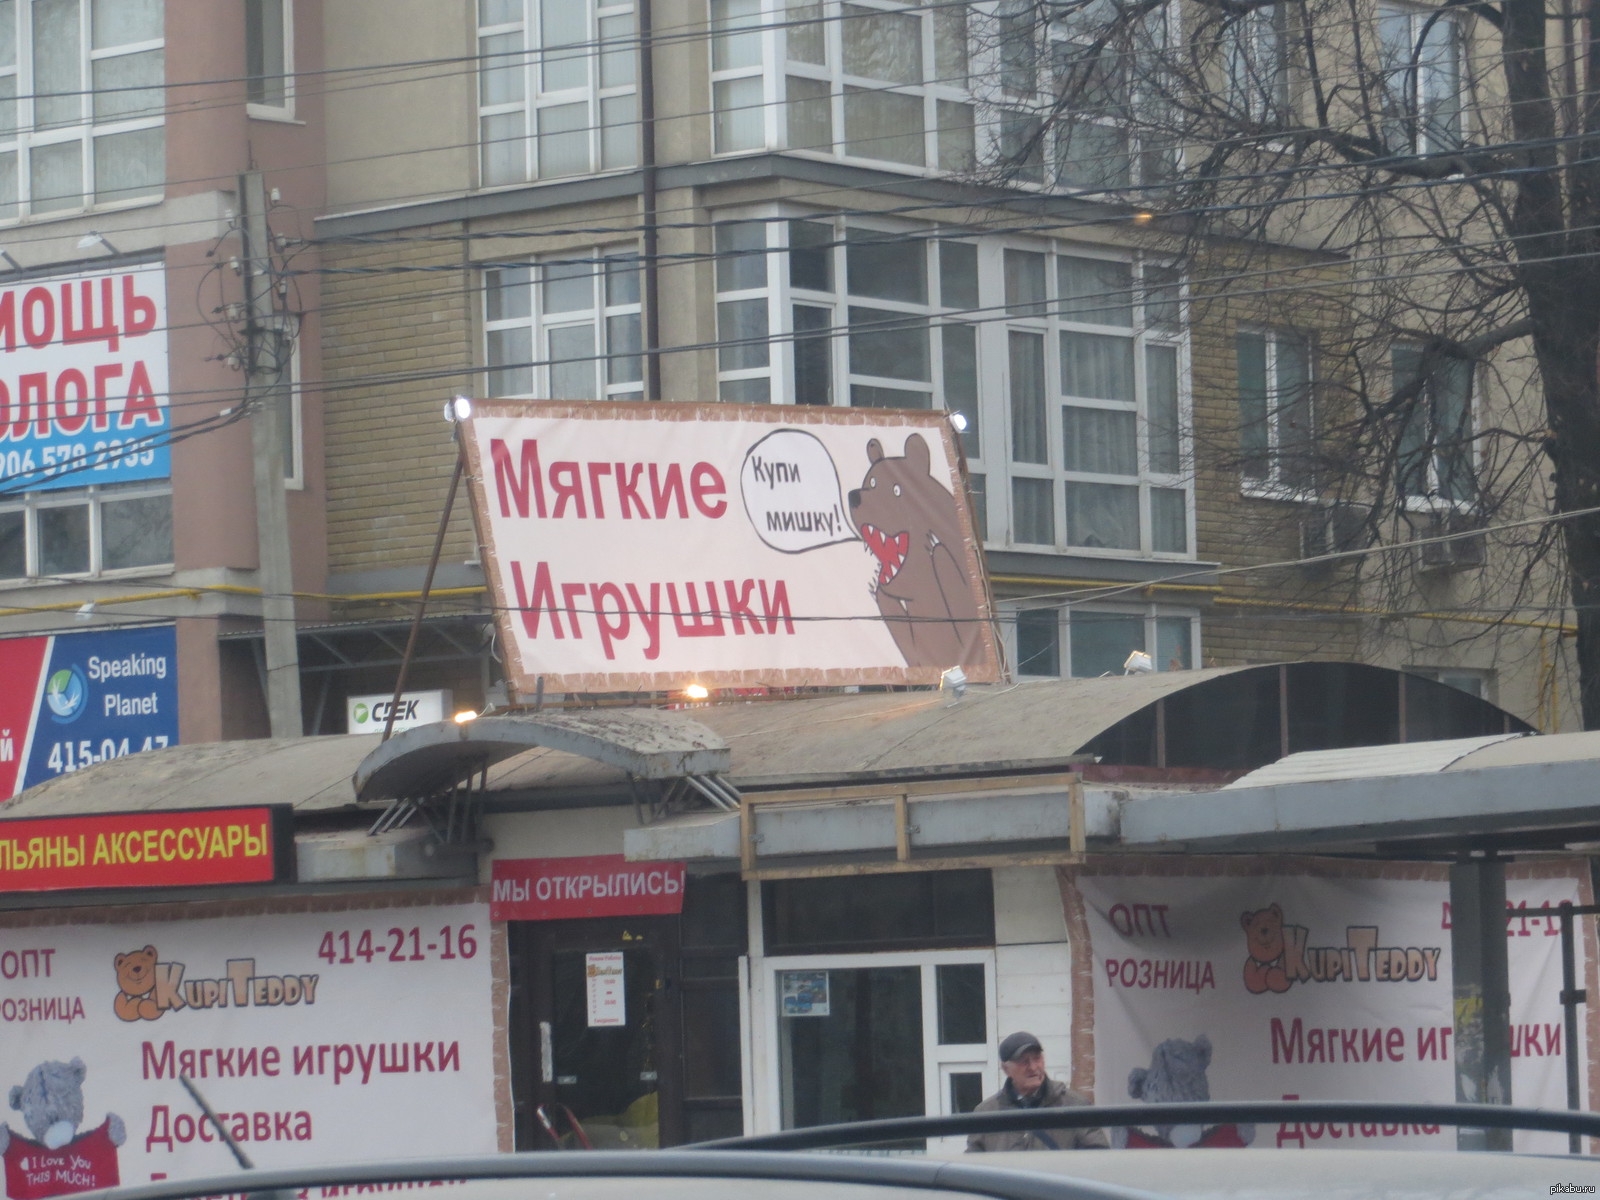 Просто реклама 1 1. Реклама Нижний Новгород. Просто реклама. Проще простого реклама. Локальная Нижегородская реклама.